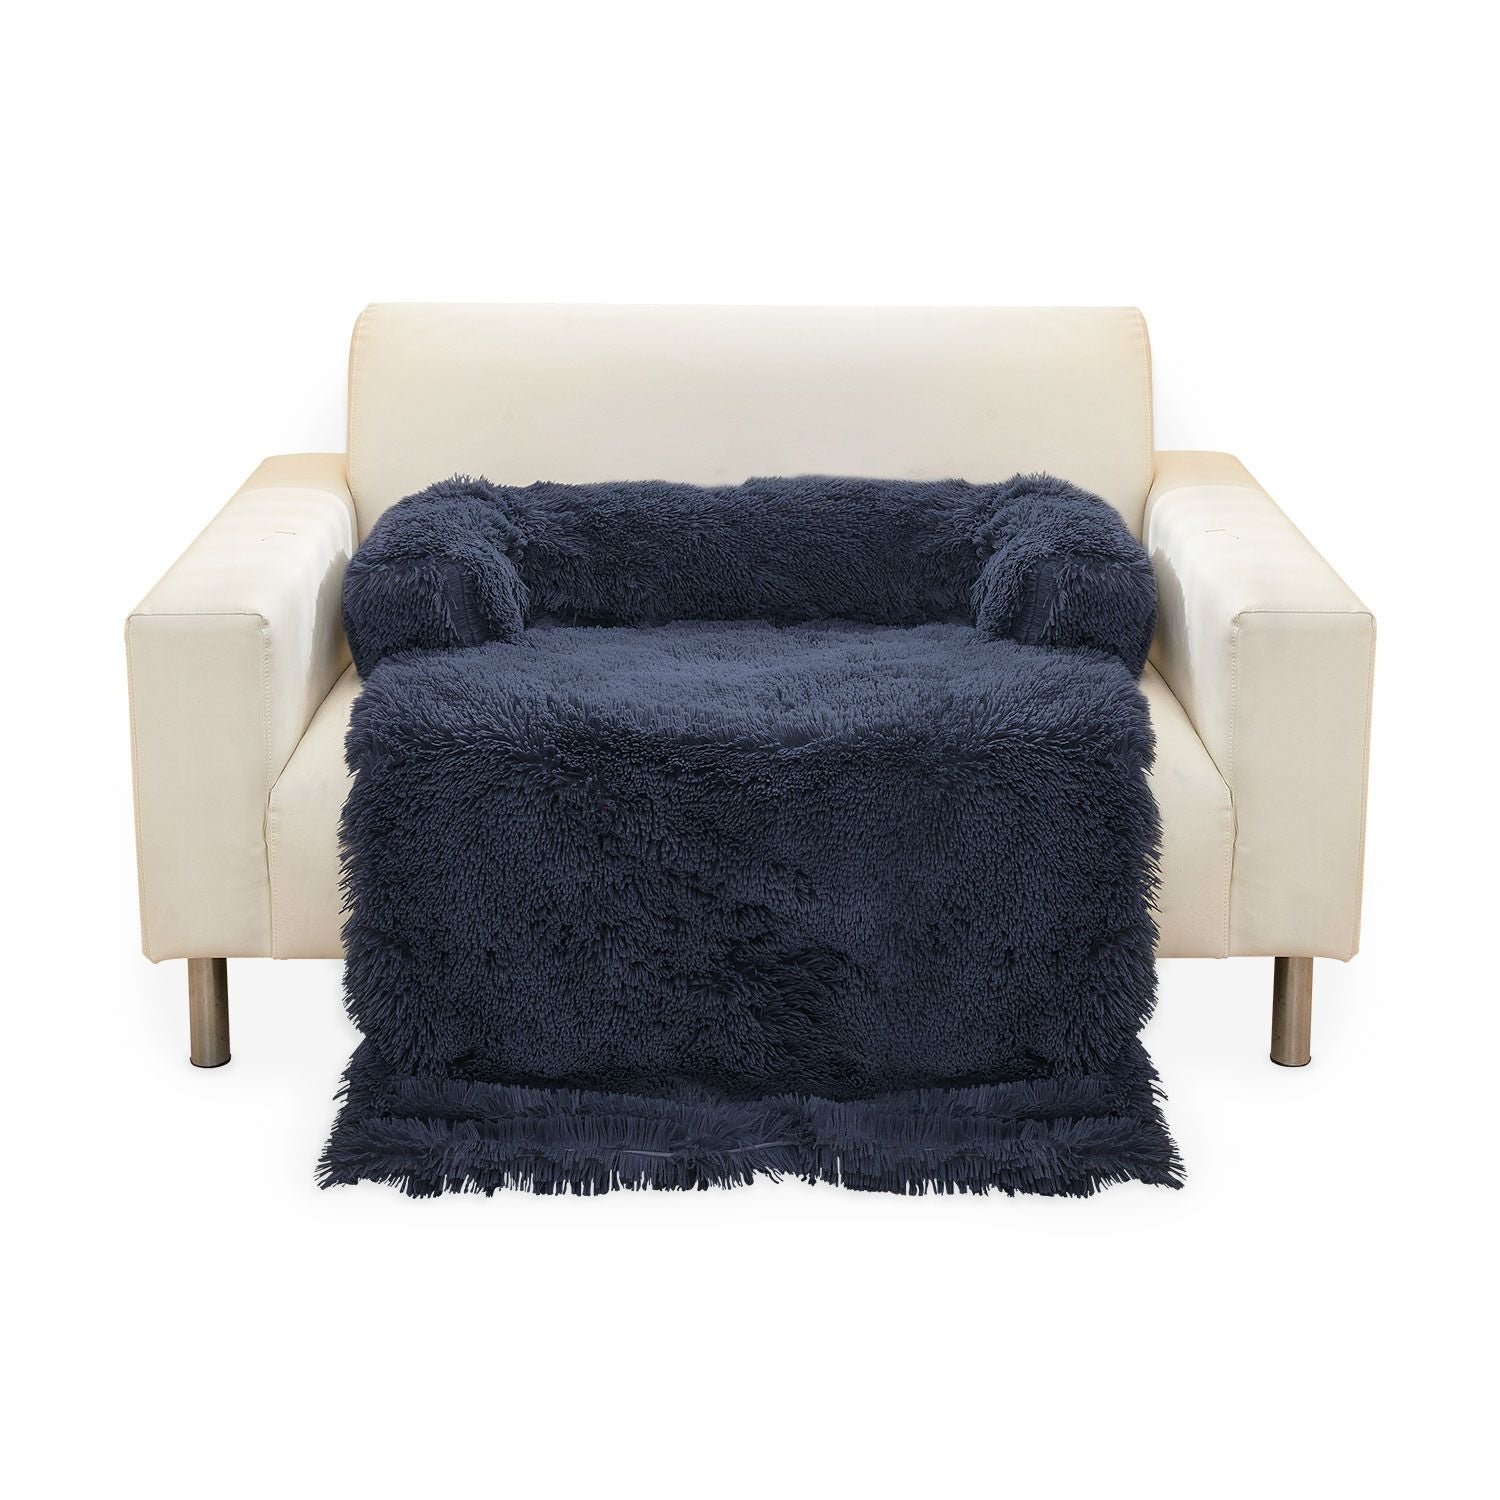 Floofi Pet Sofa Cover Soft with Bolster XL Size (Dark Blue)